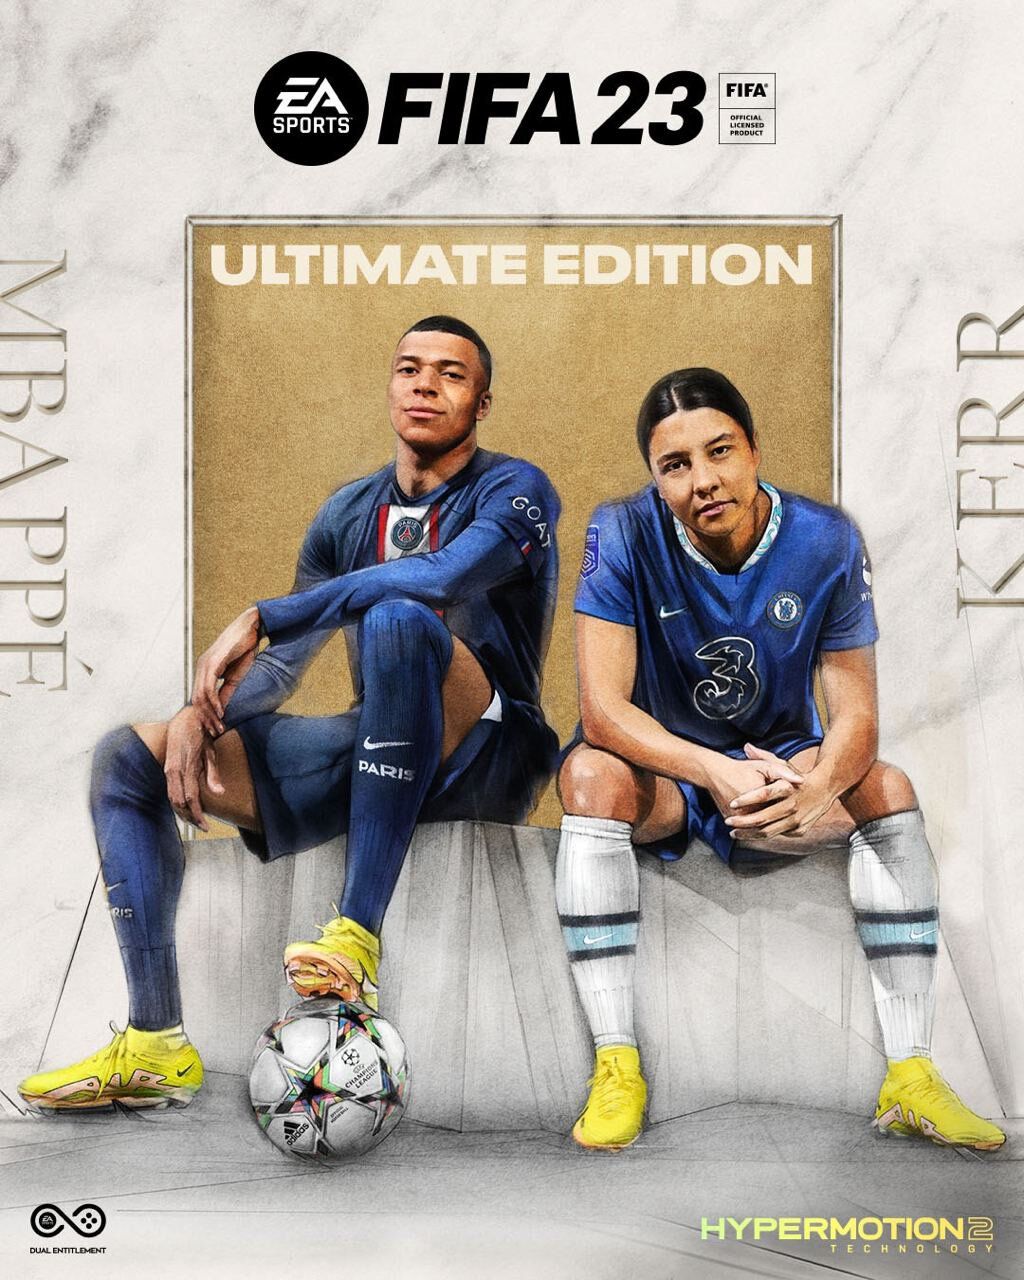 Обложка Ultimate-издания FIFA 23